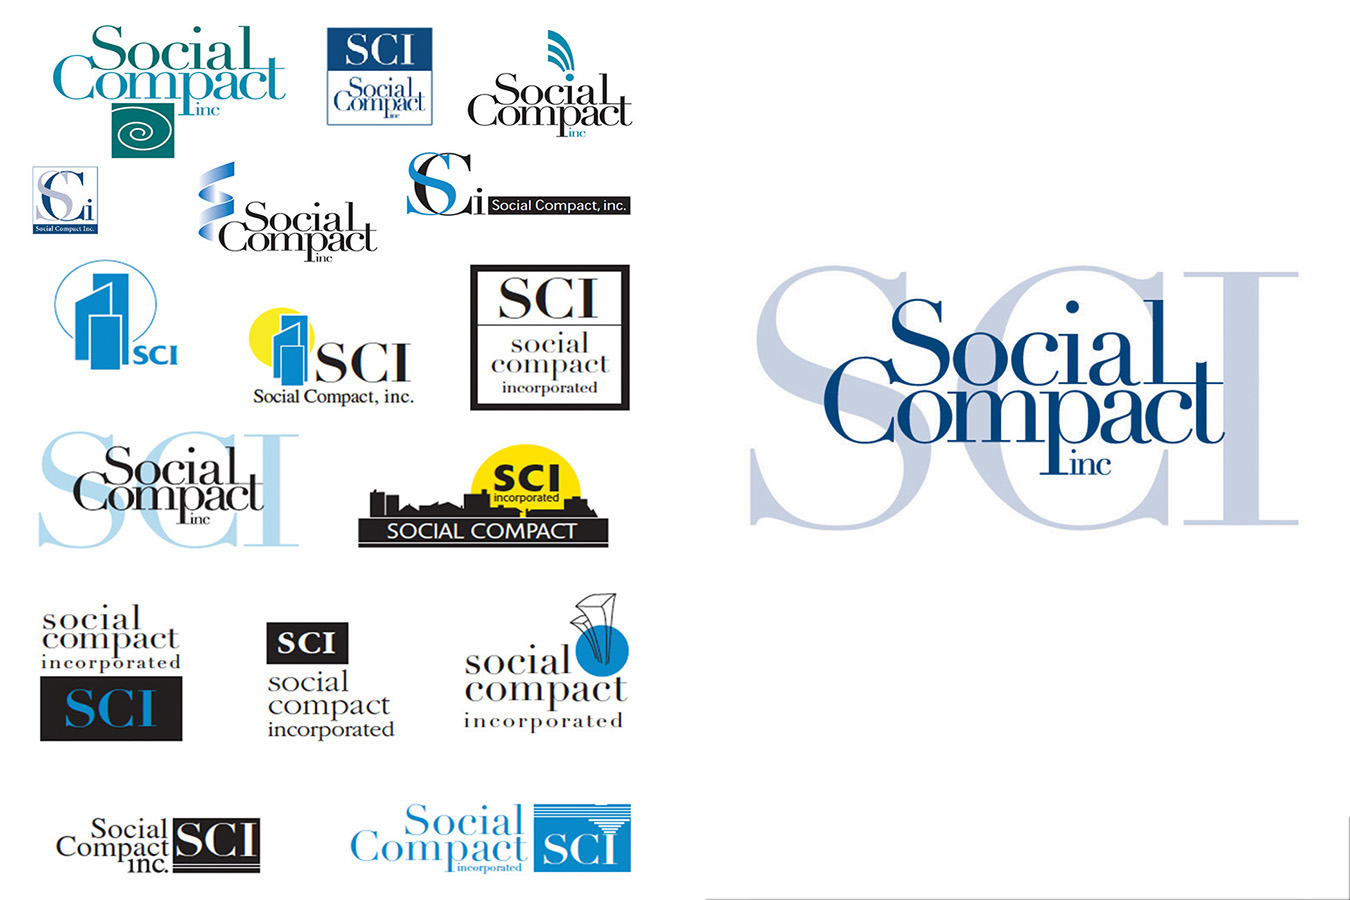 Logo 24 : Social Compact, analyzes data on inner city demographics for economic development